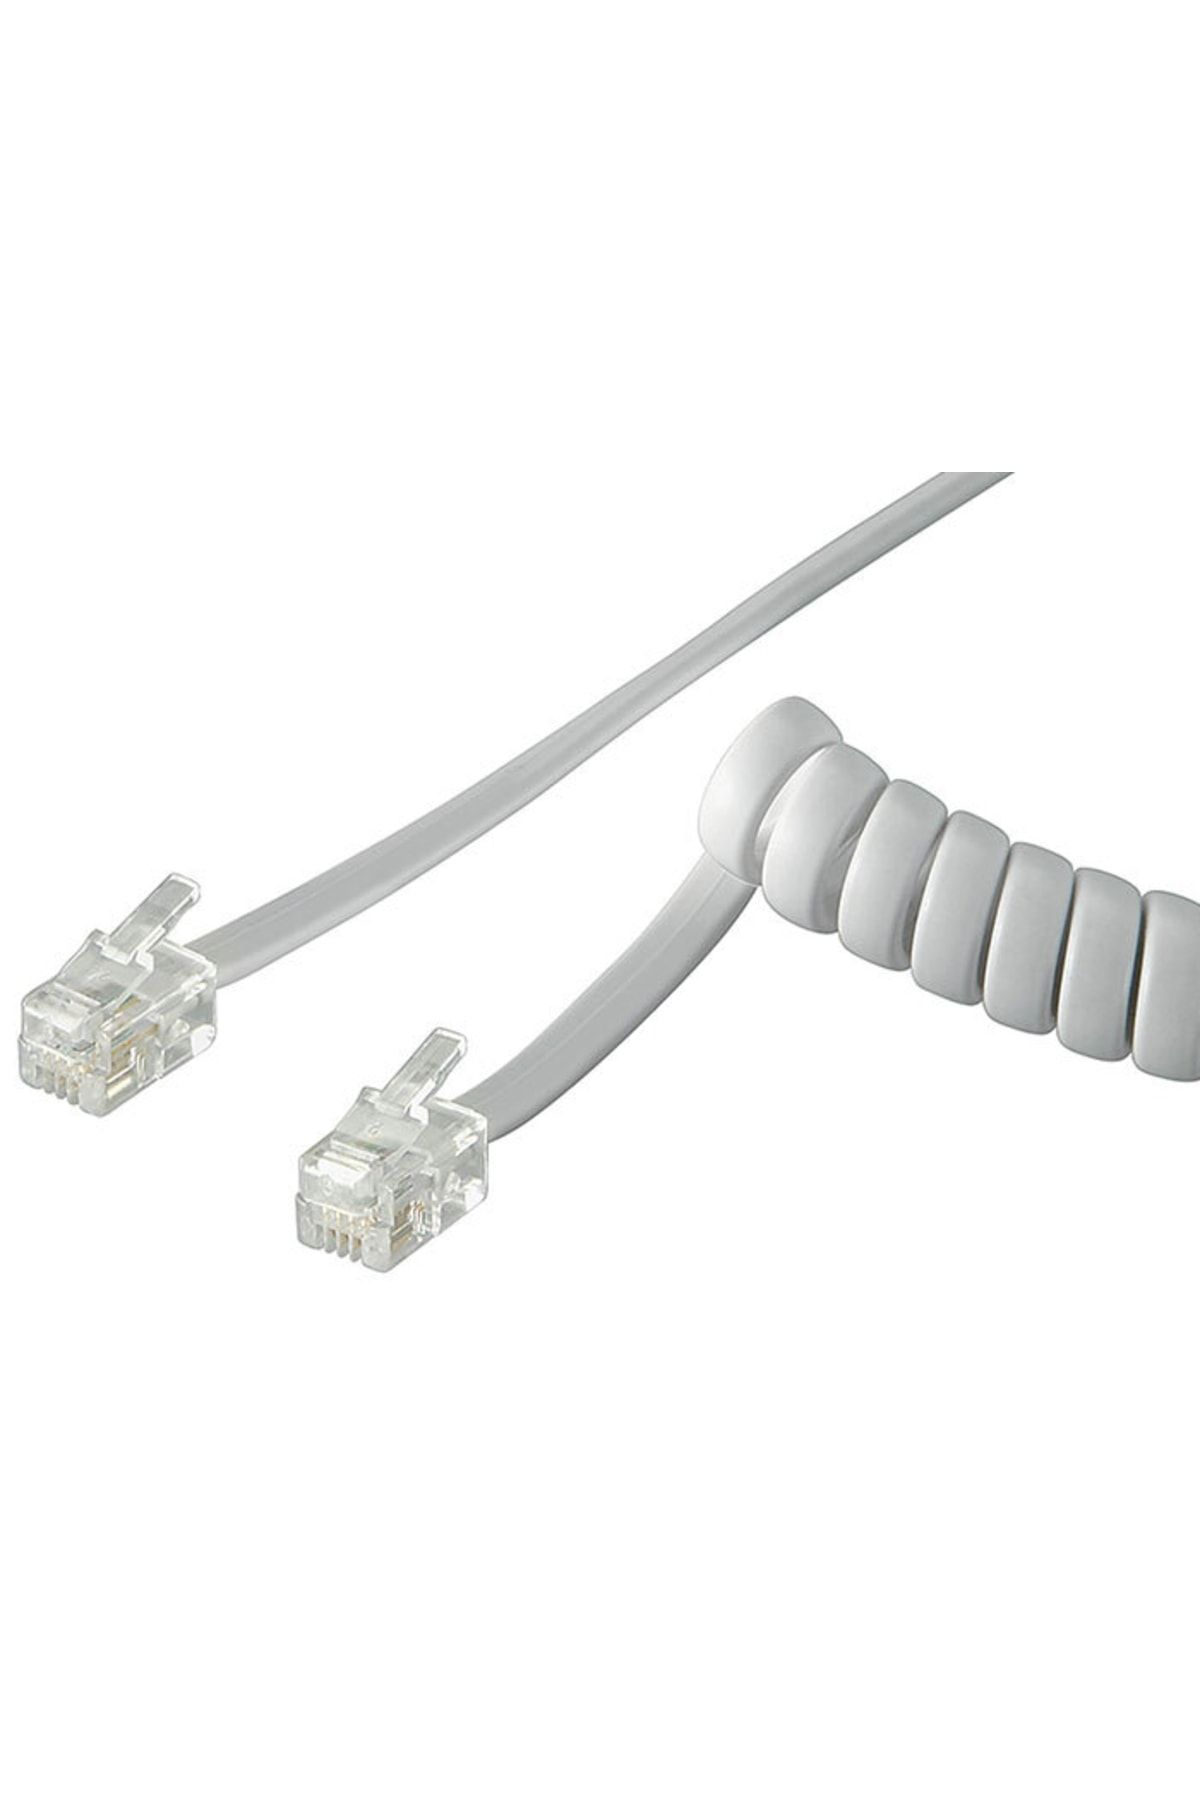 S-Link Sl-tel3g 2 Metre Telefon Ahize Kordonu Beyaz